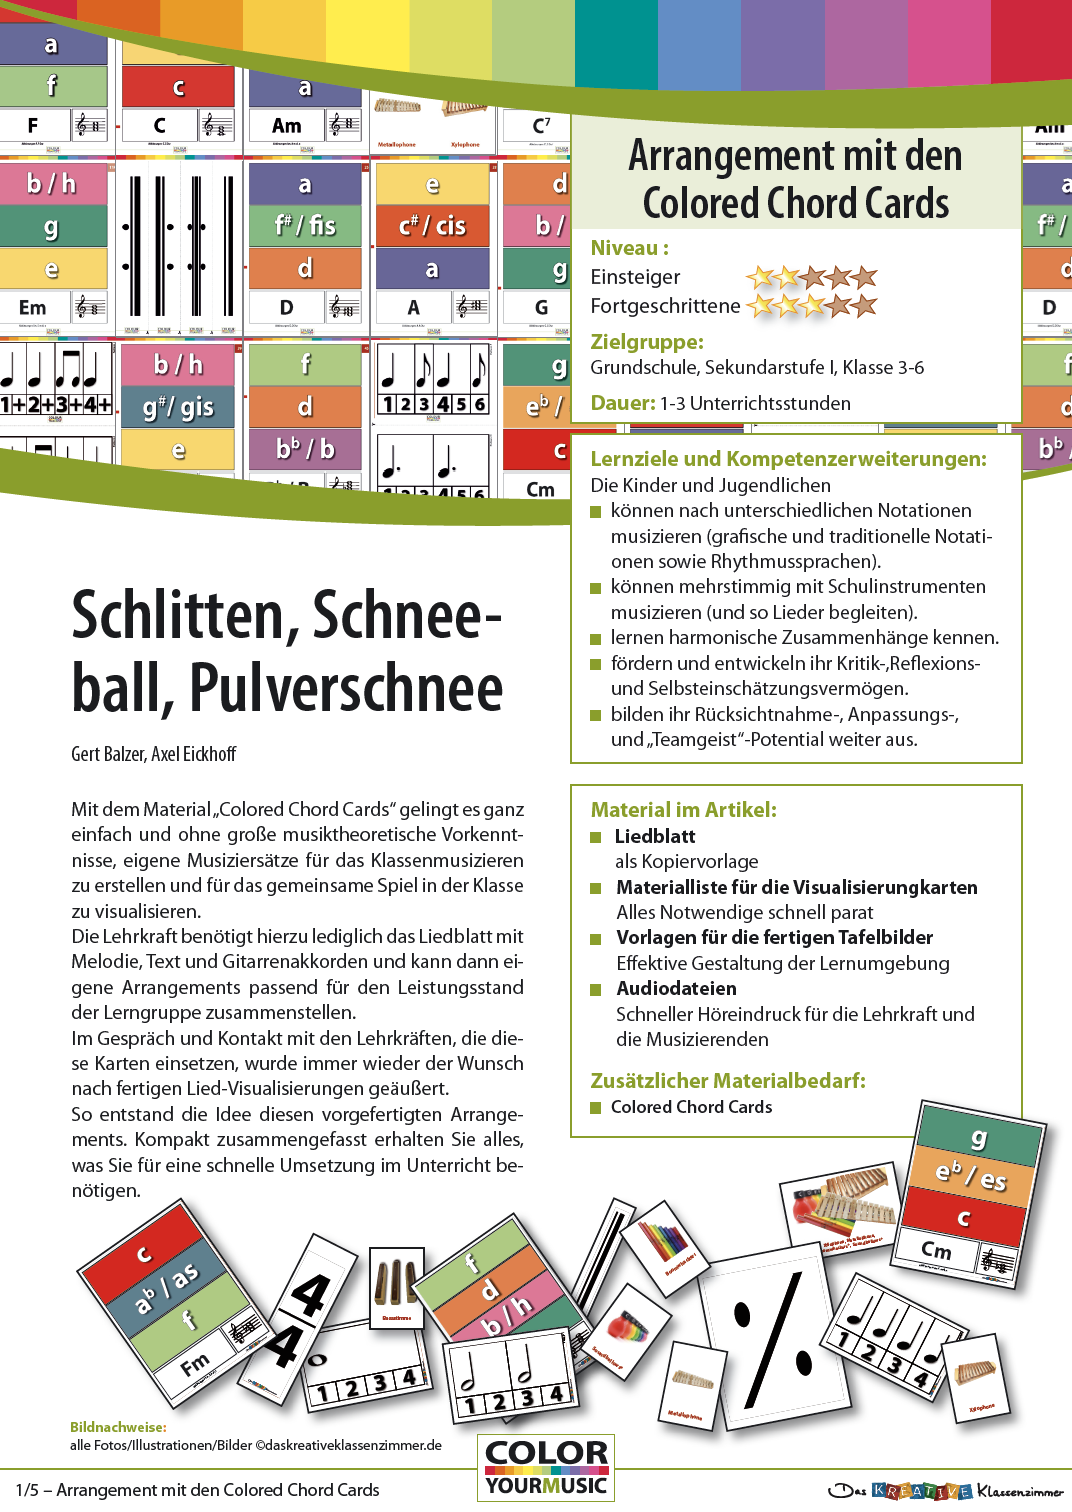 Schlitten, Schneeball, Pulverschnee - Colored Chord Cards